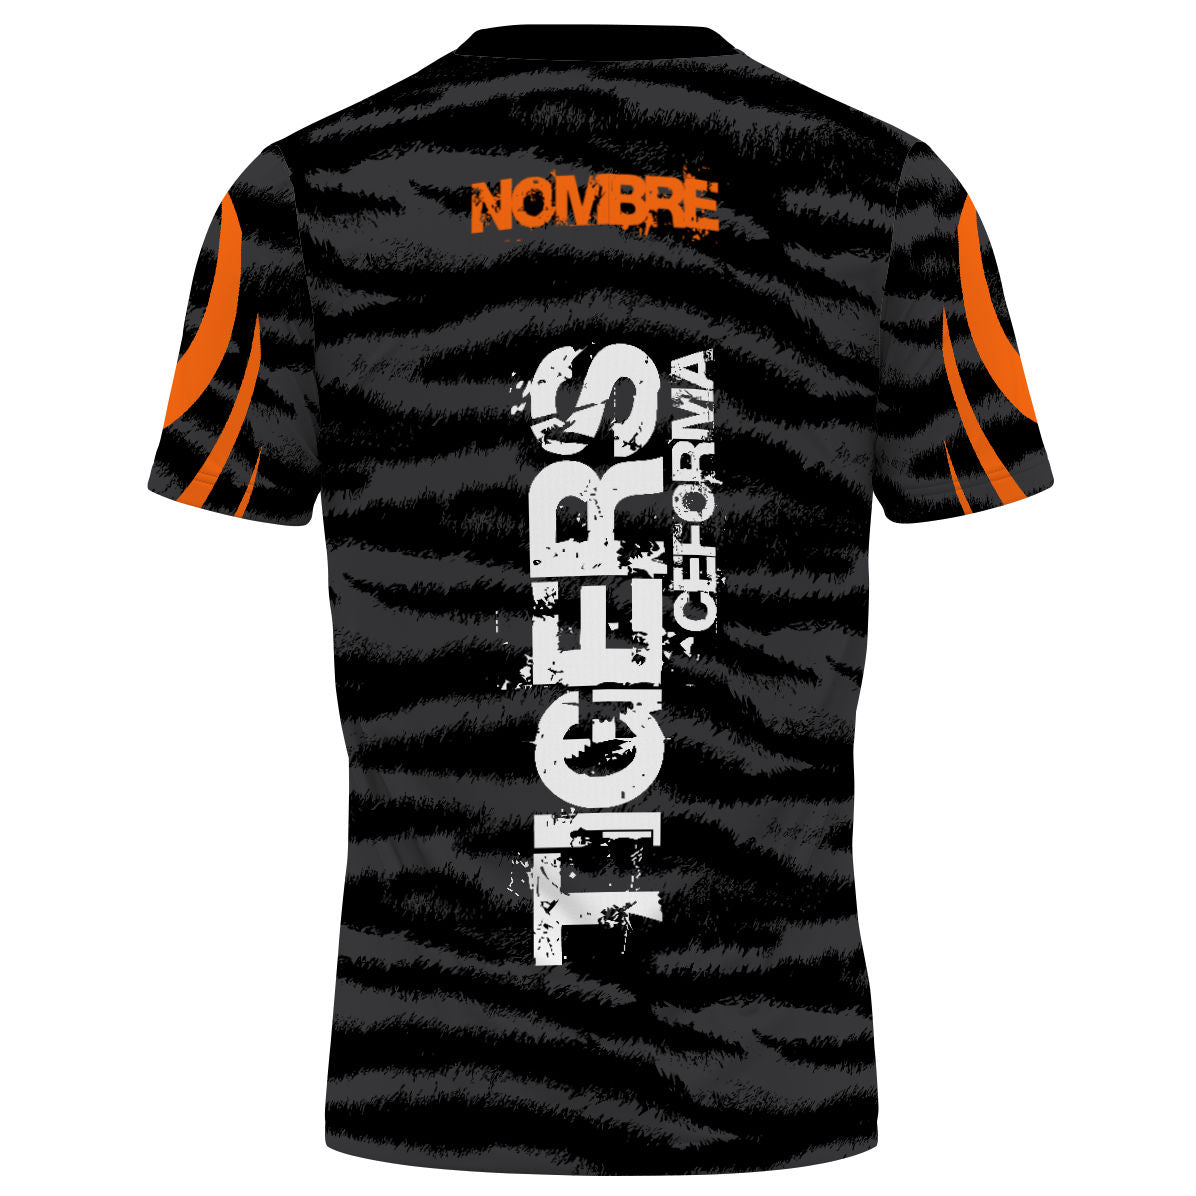 Tigers Ceforma 1 - Men's Performance Shirt